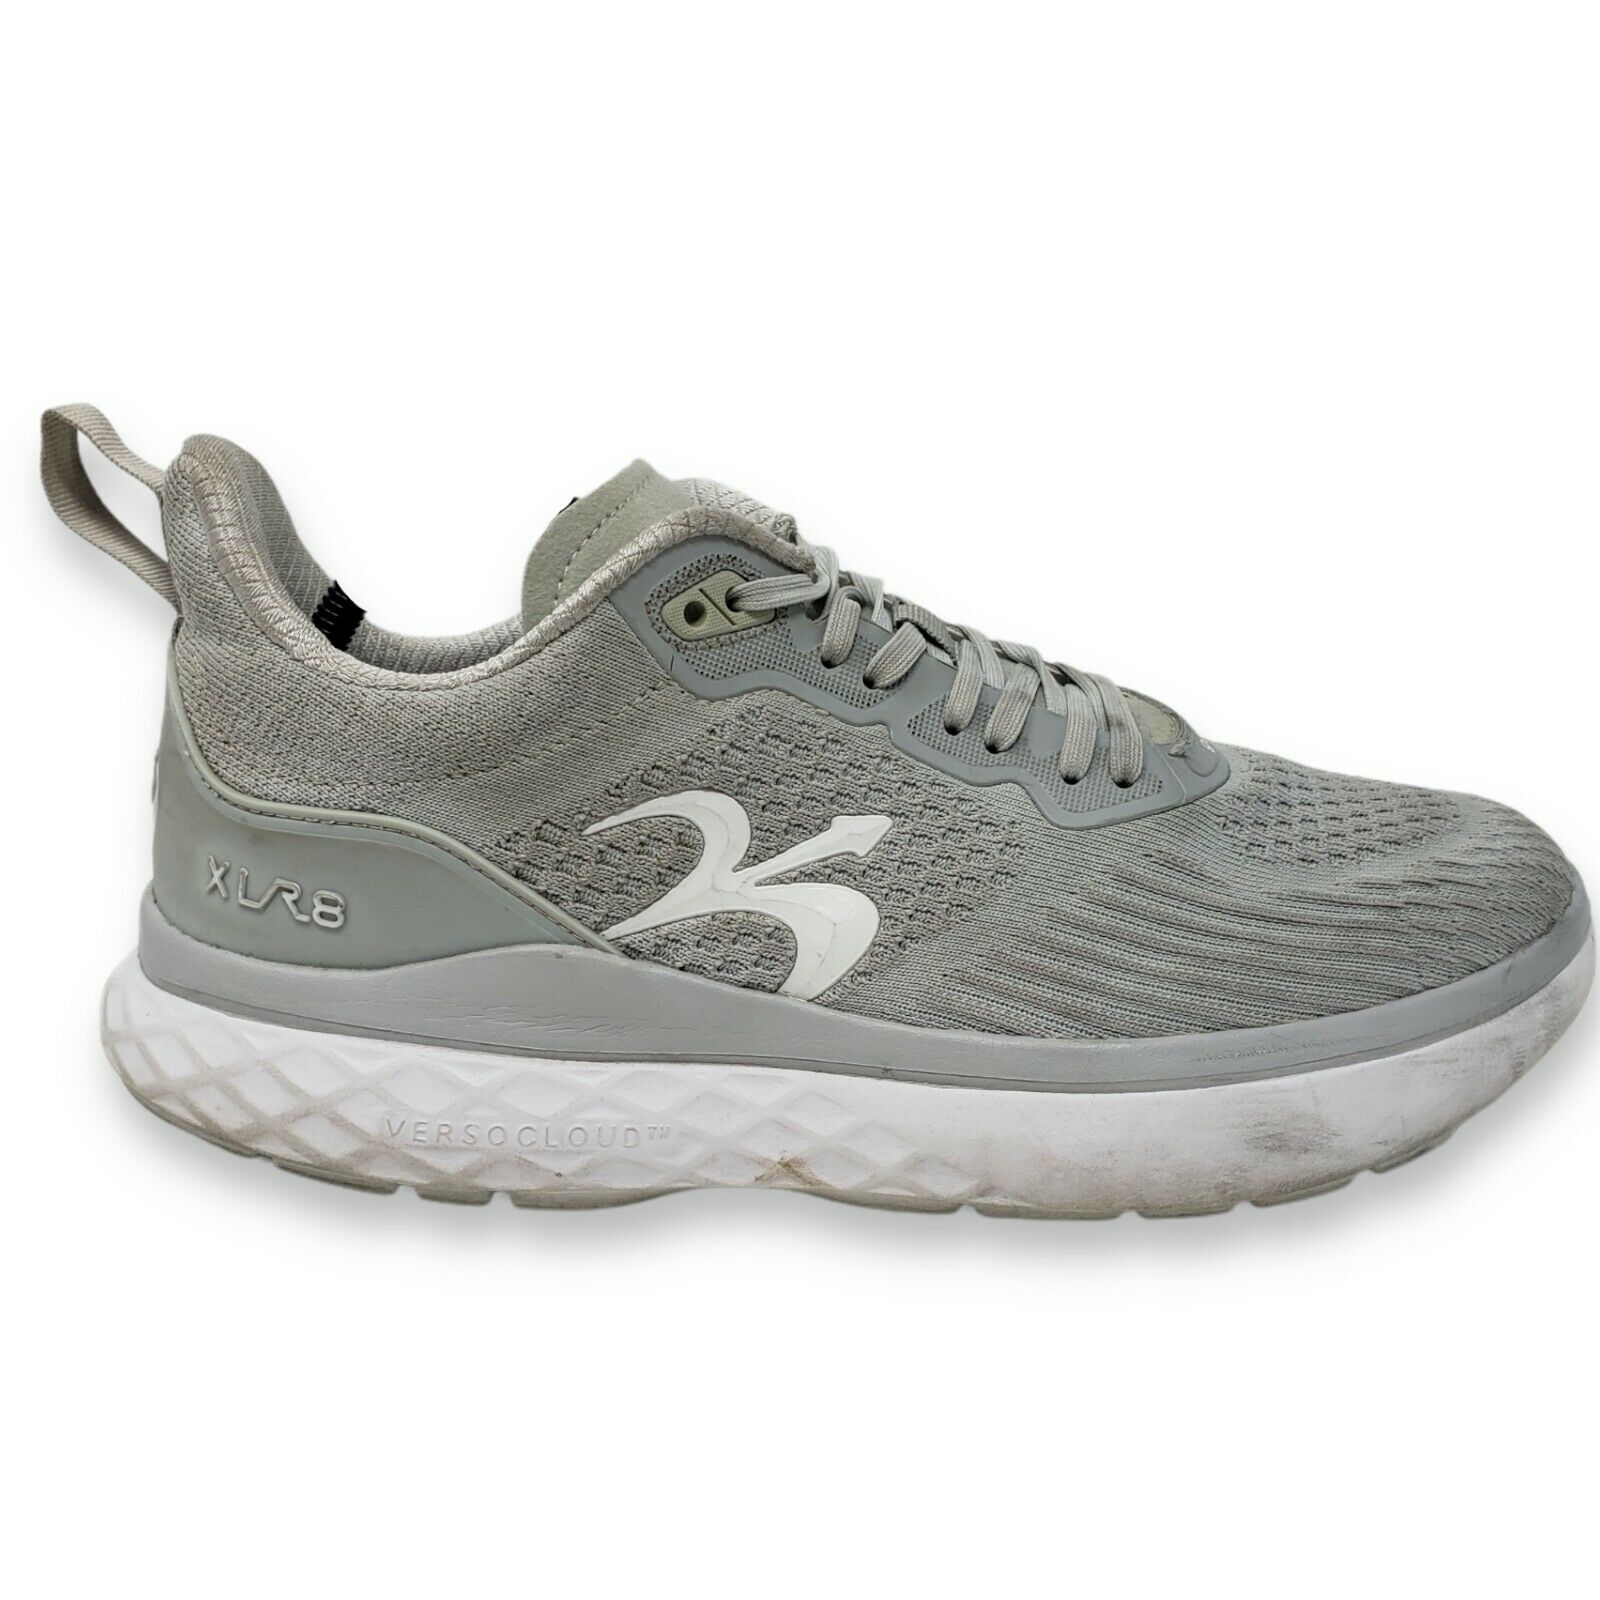 GDEFY Gravity Defyer XLR 8 Run Mens Size 12 Grey White Walking Running Shoes